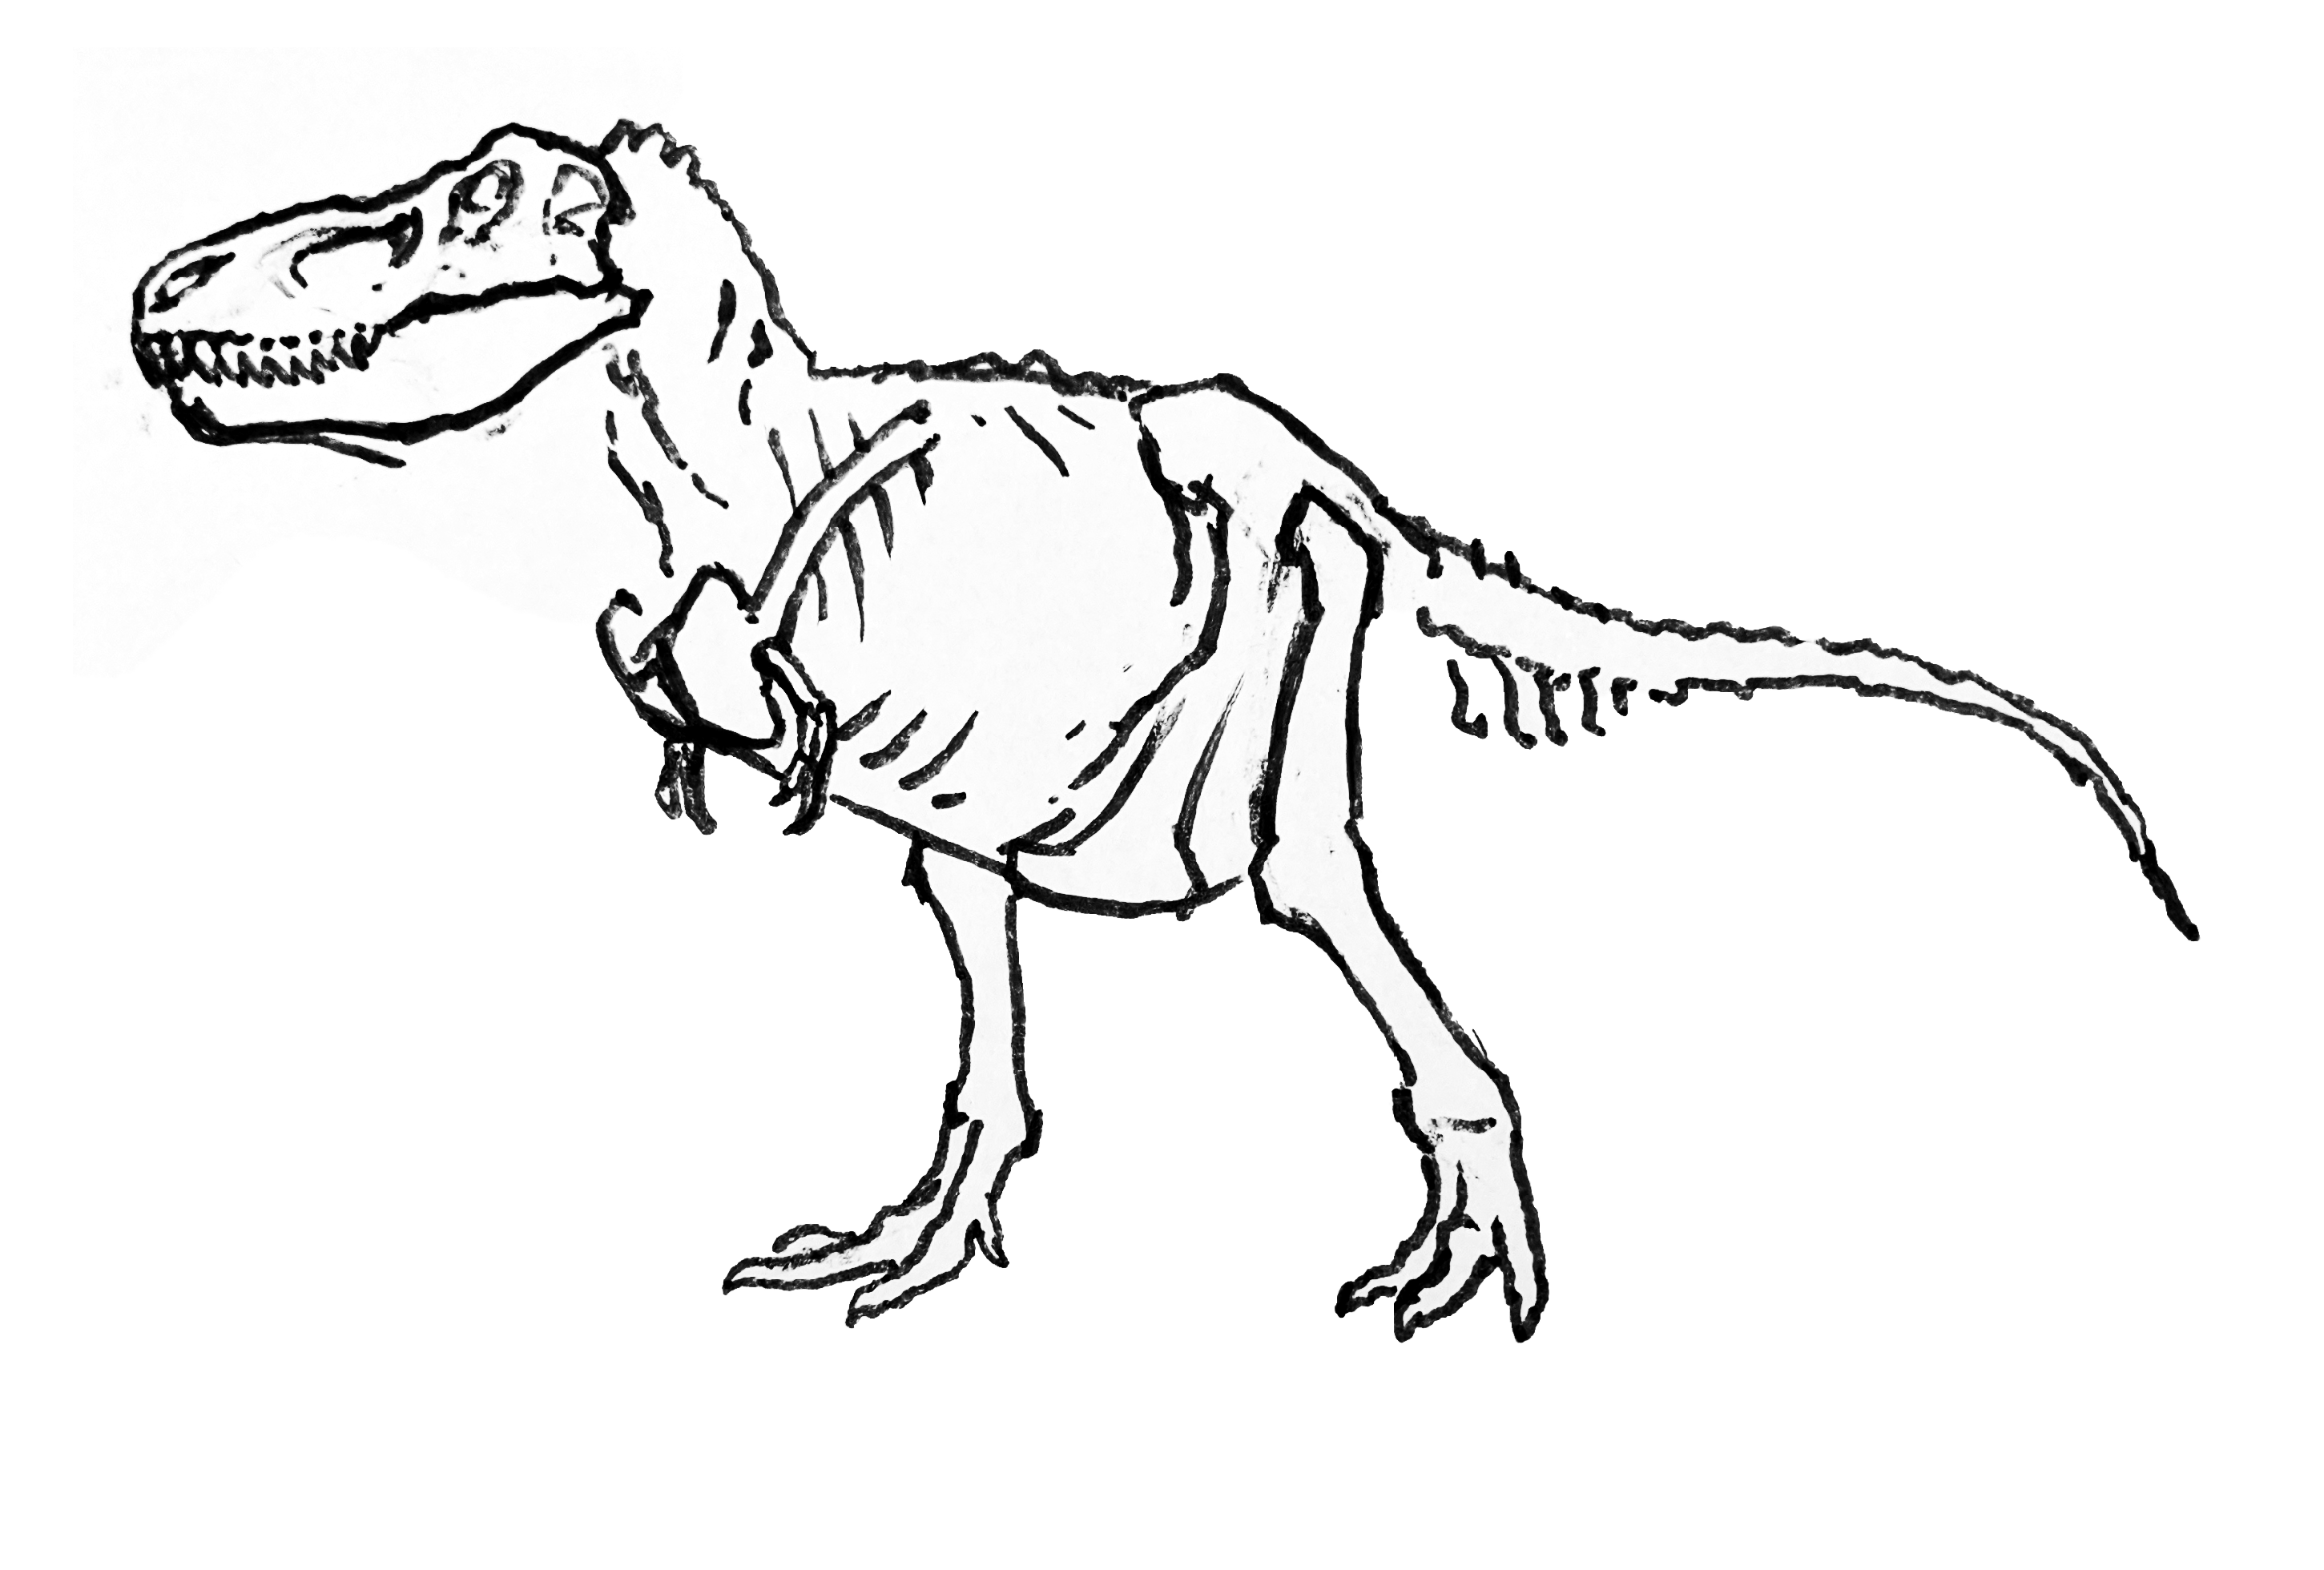 How to draw a Tyrannosaurus rex dinosaur